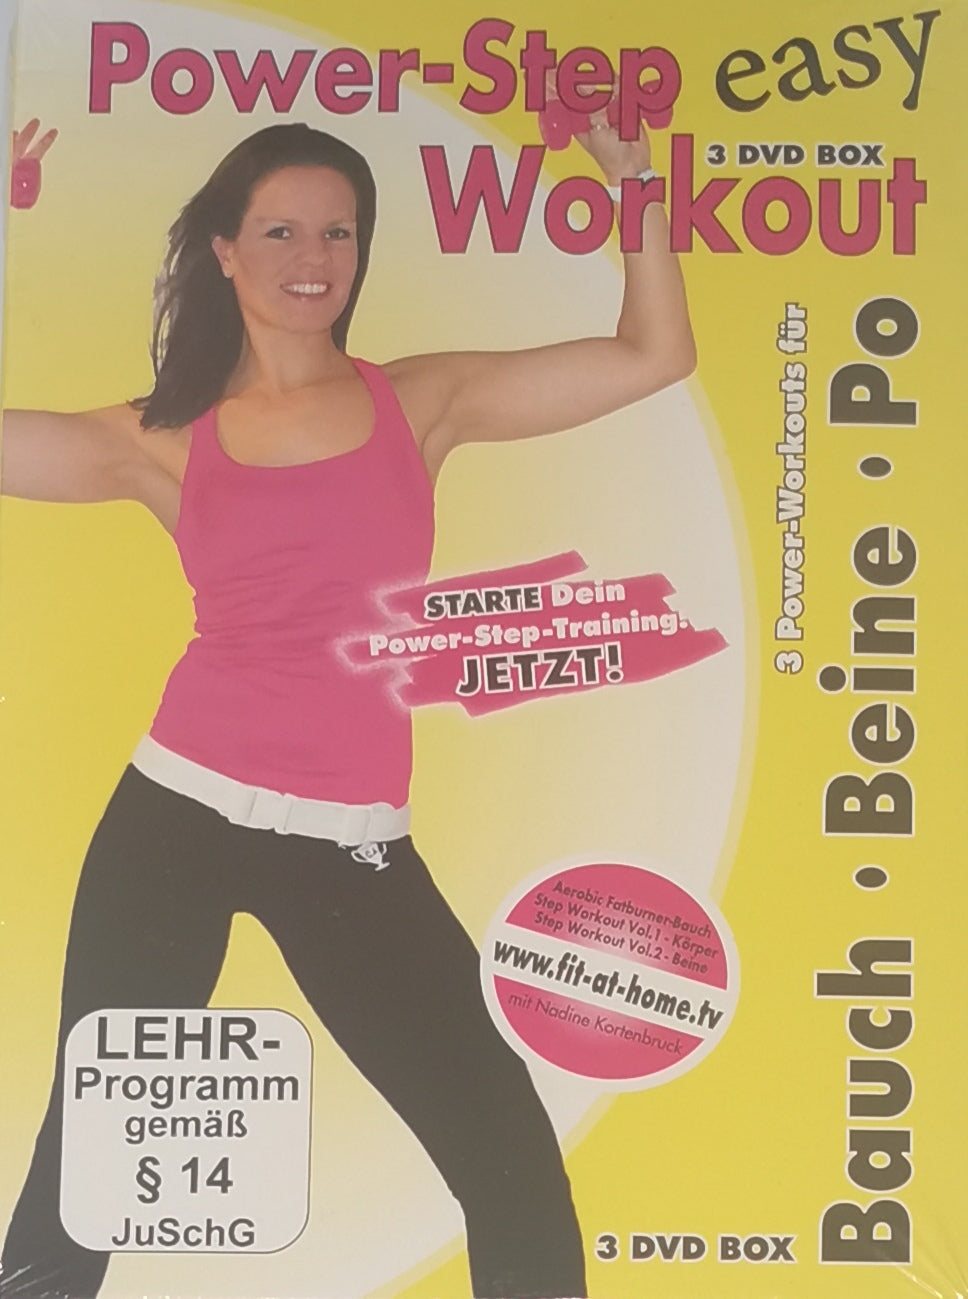 Easy Power Step Aerobic Fatburner Workout Bauch Beine Po 3 DVD Fitness Box  [Neu]